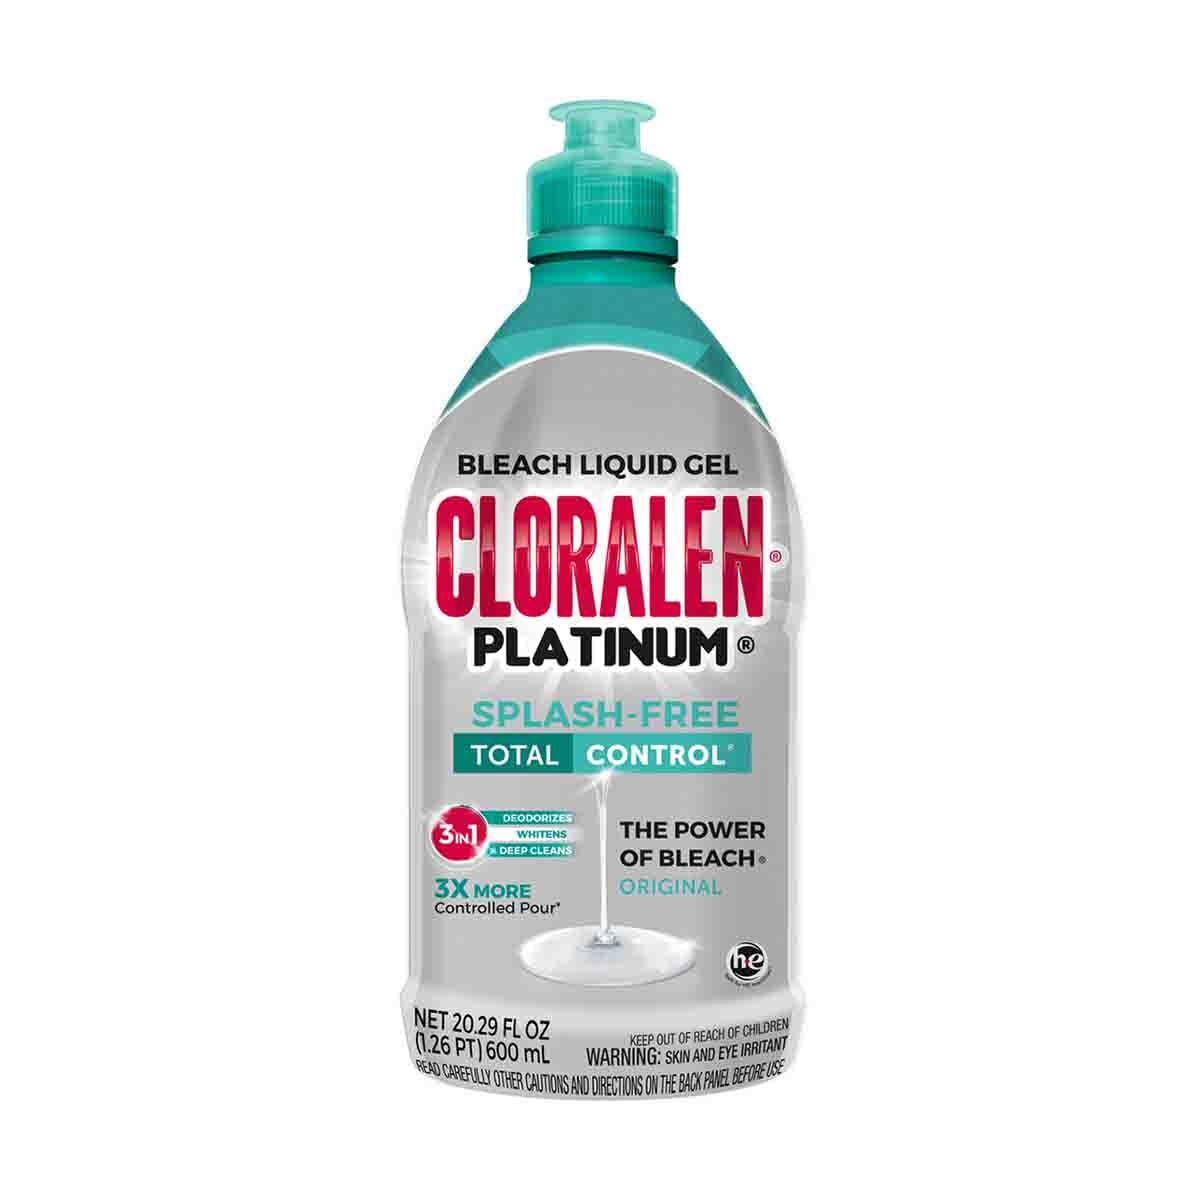 Cloralen Bathroom Cleaner with Bleach Spray Bottle, Lavender 32 fl oz, Shop